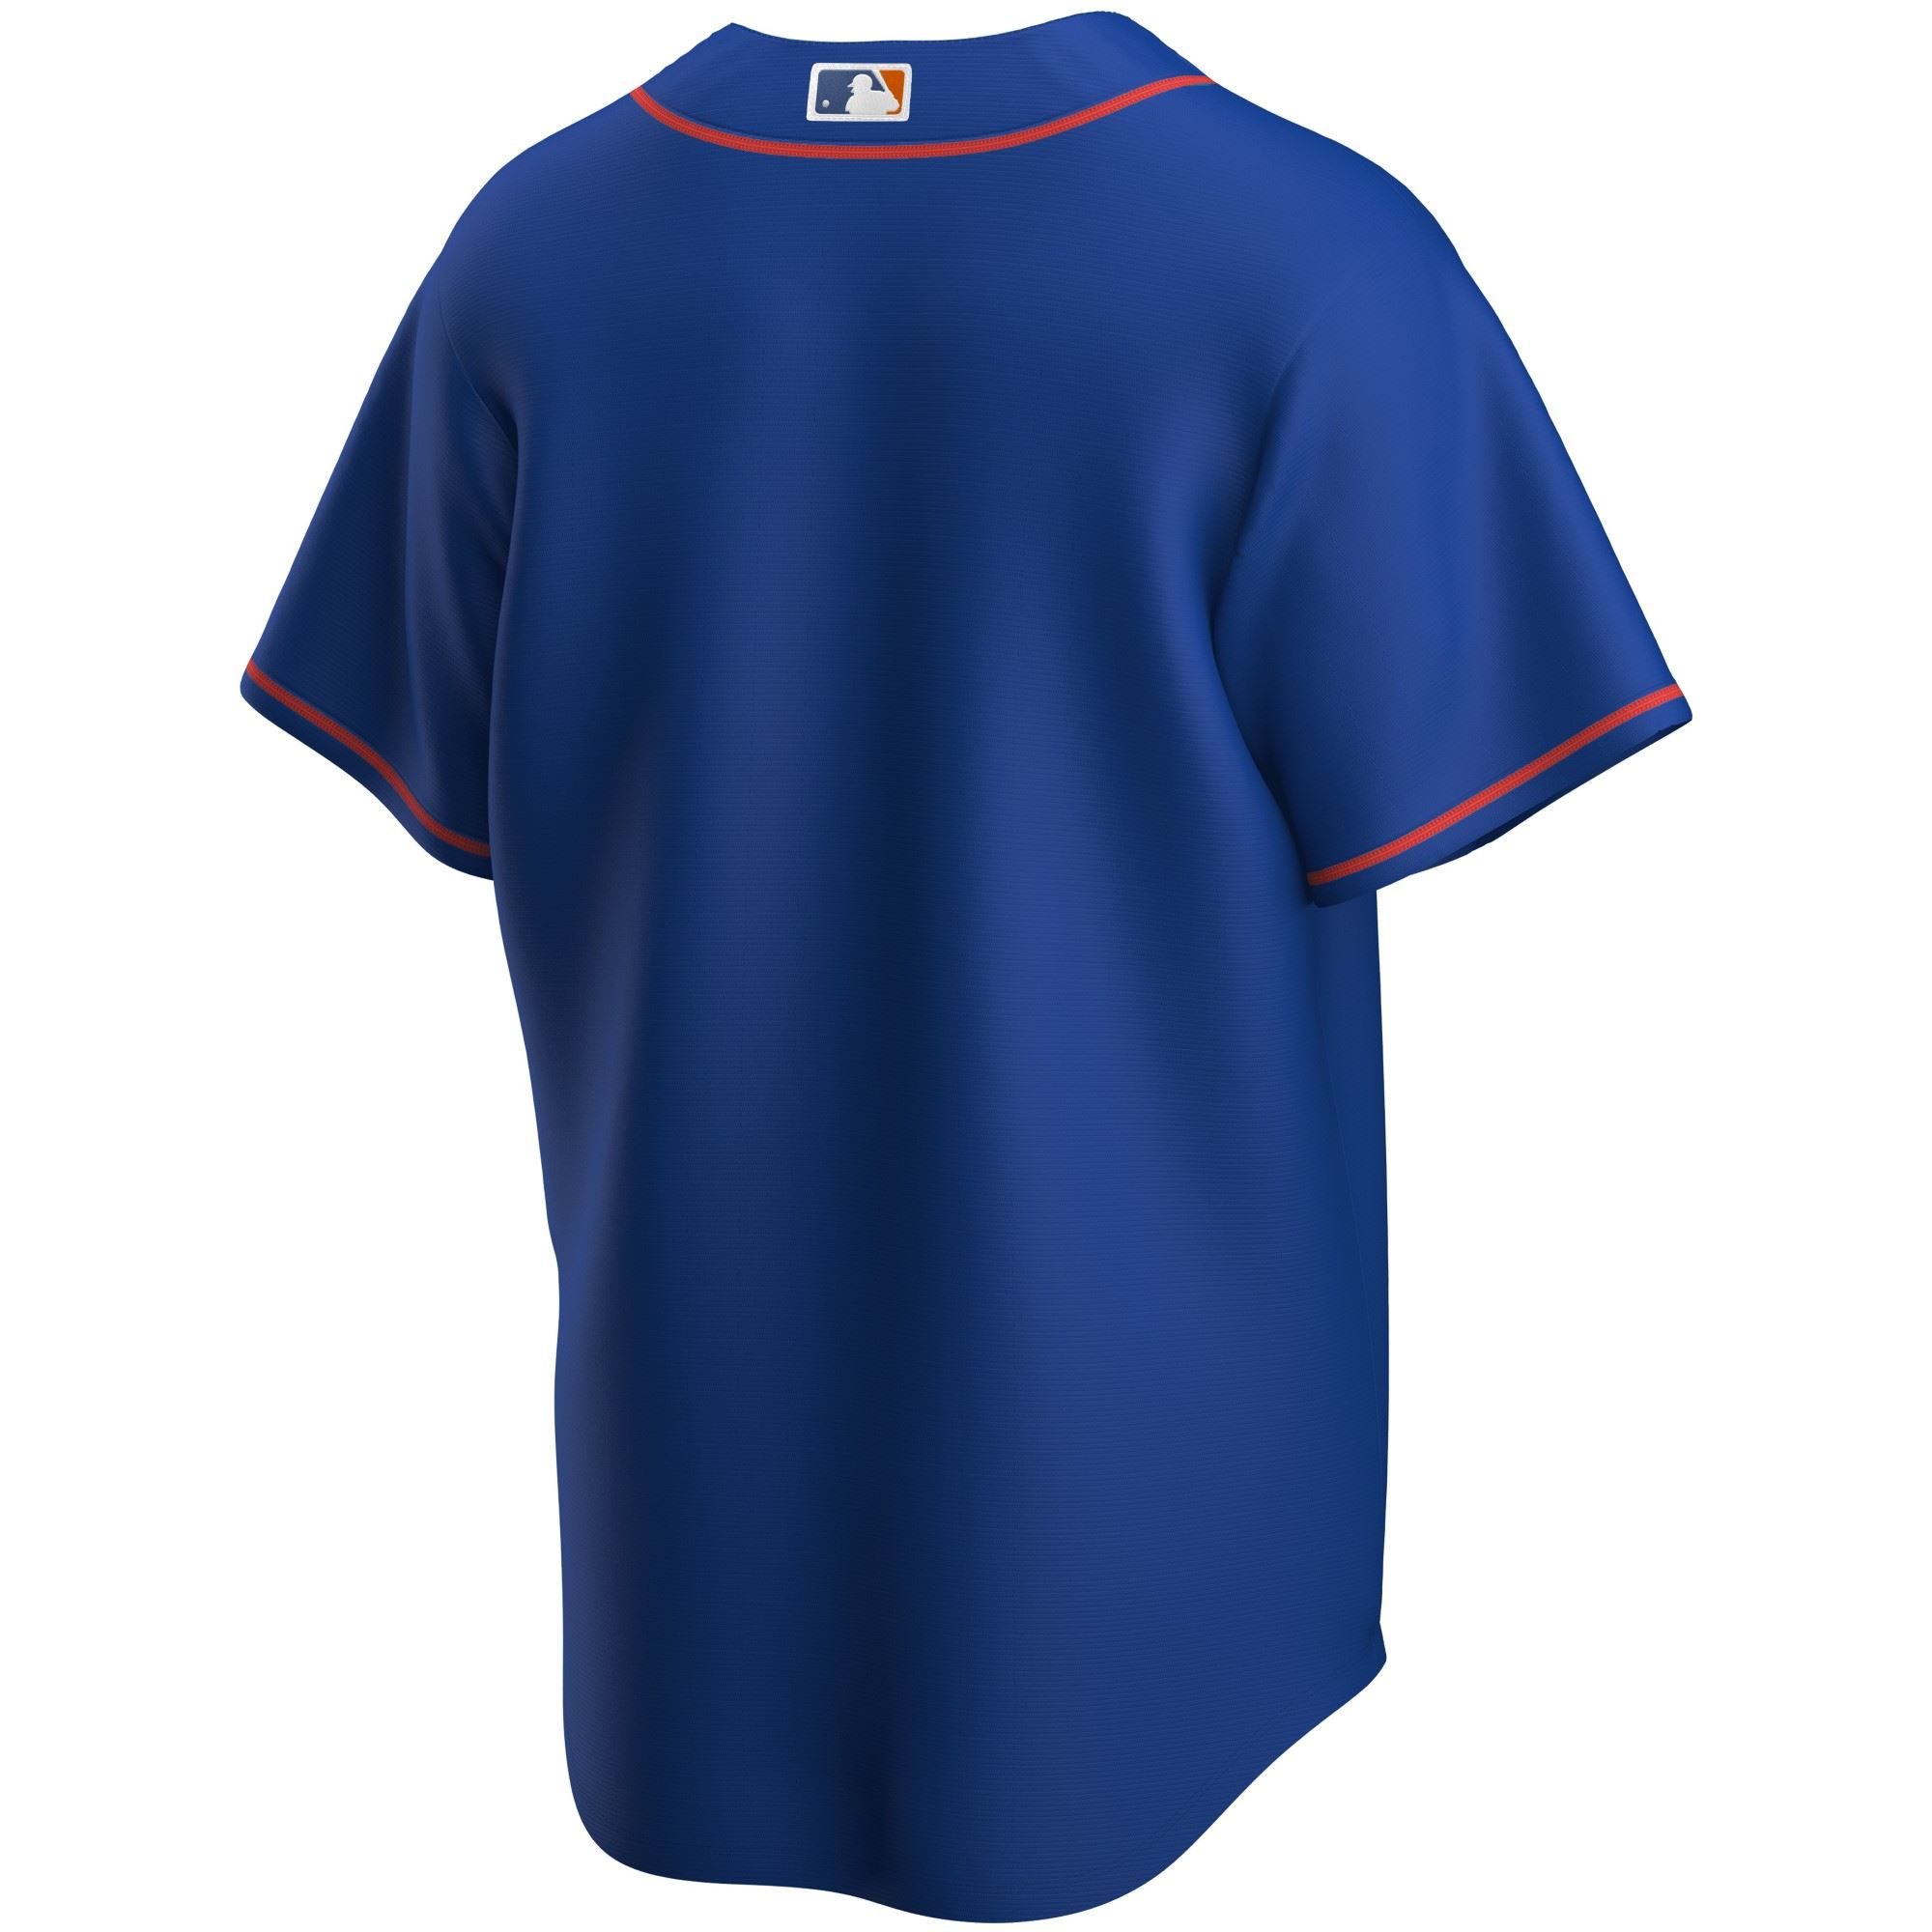 New York Mets Official MLB Replica Alternate Jersey Blue Nike